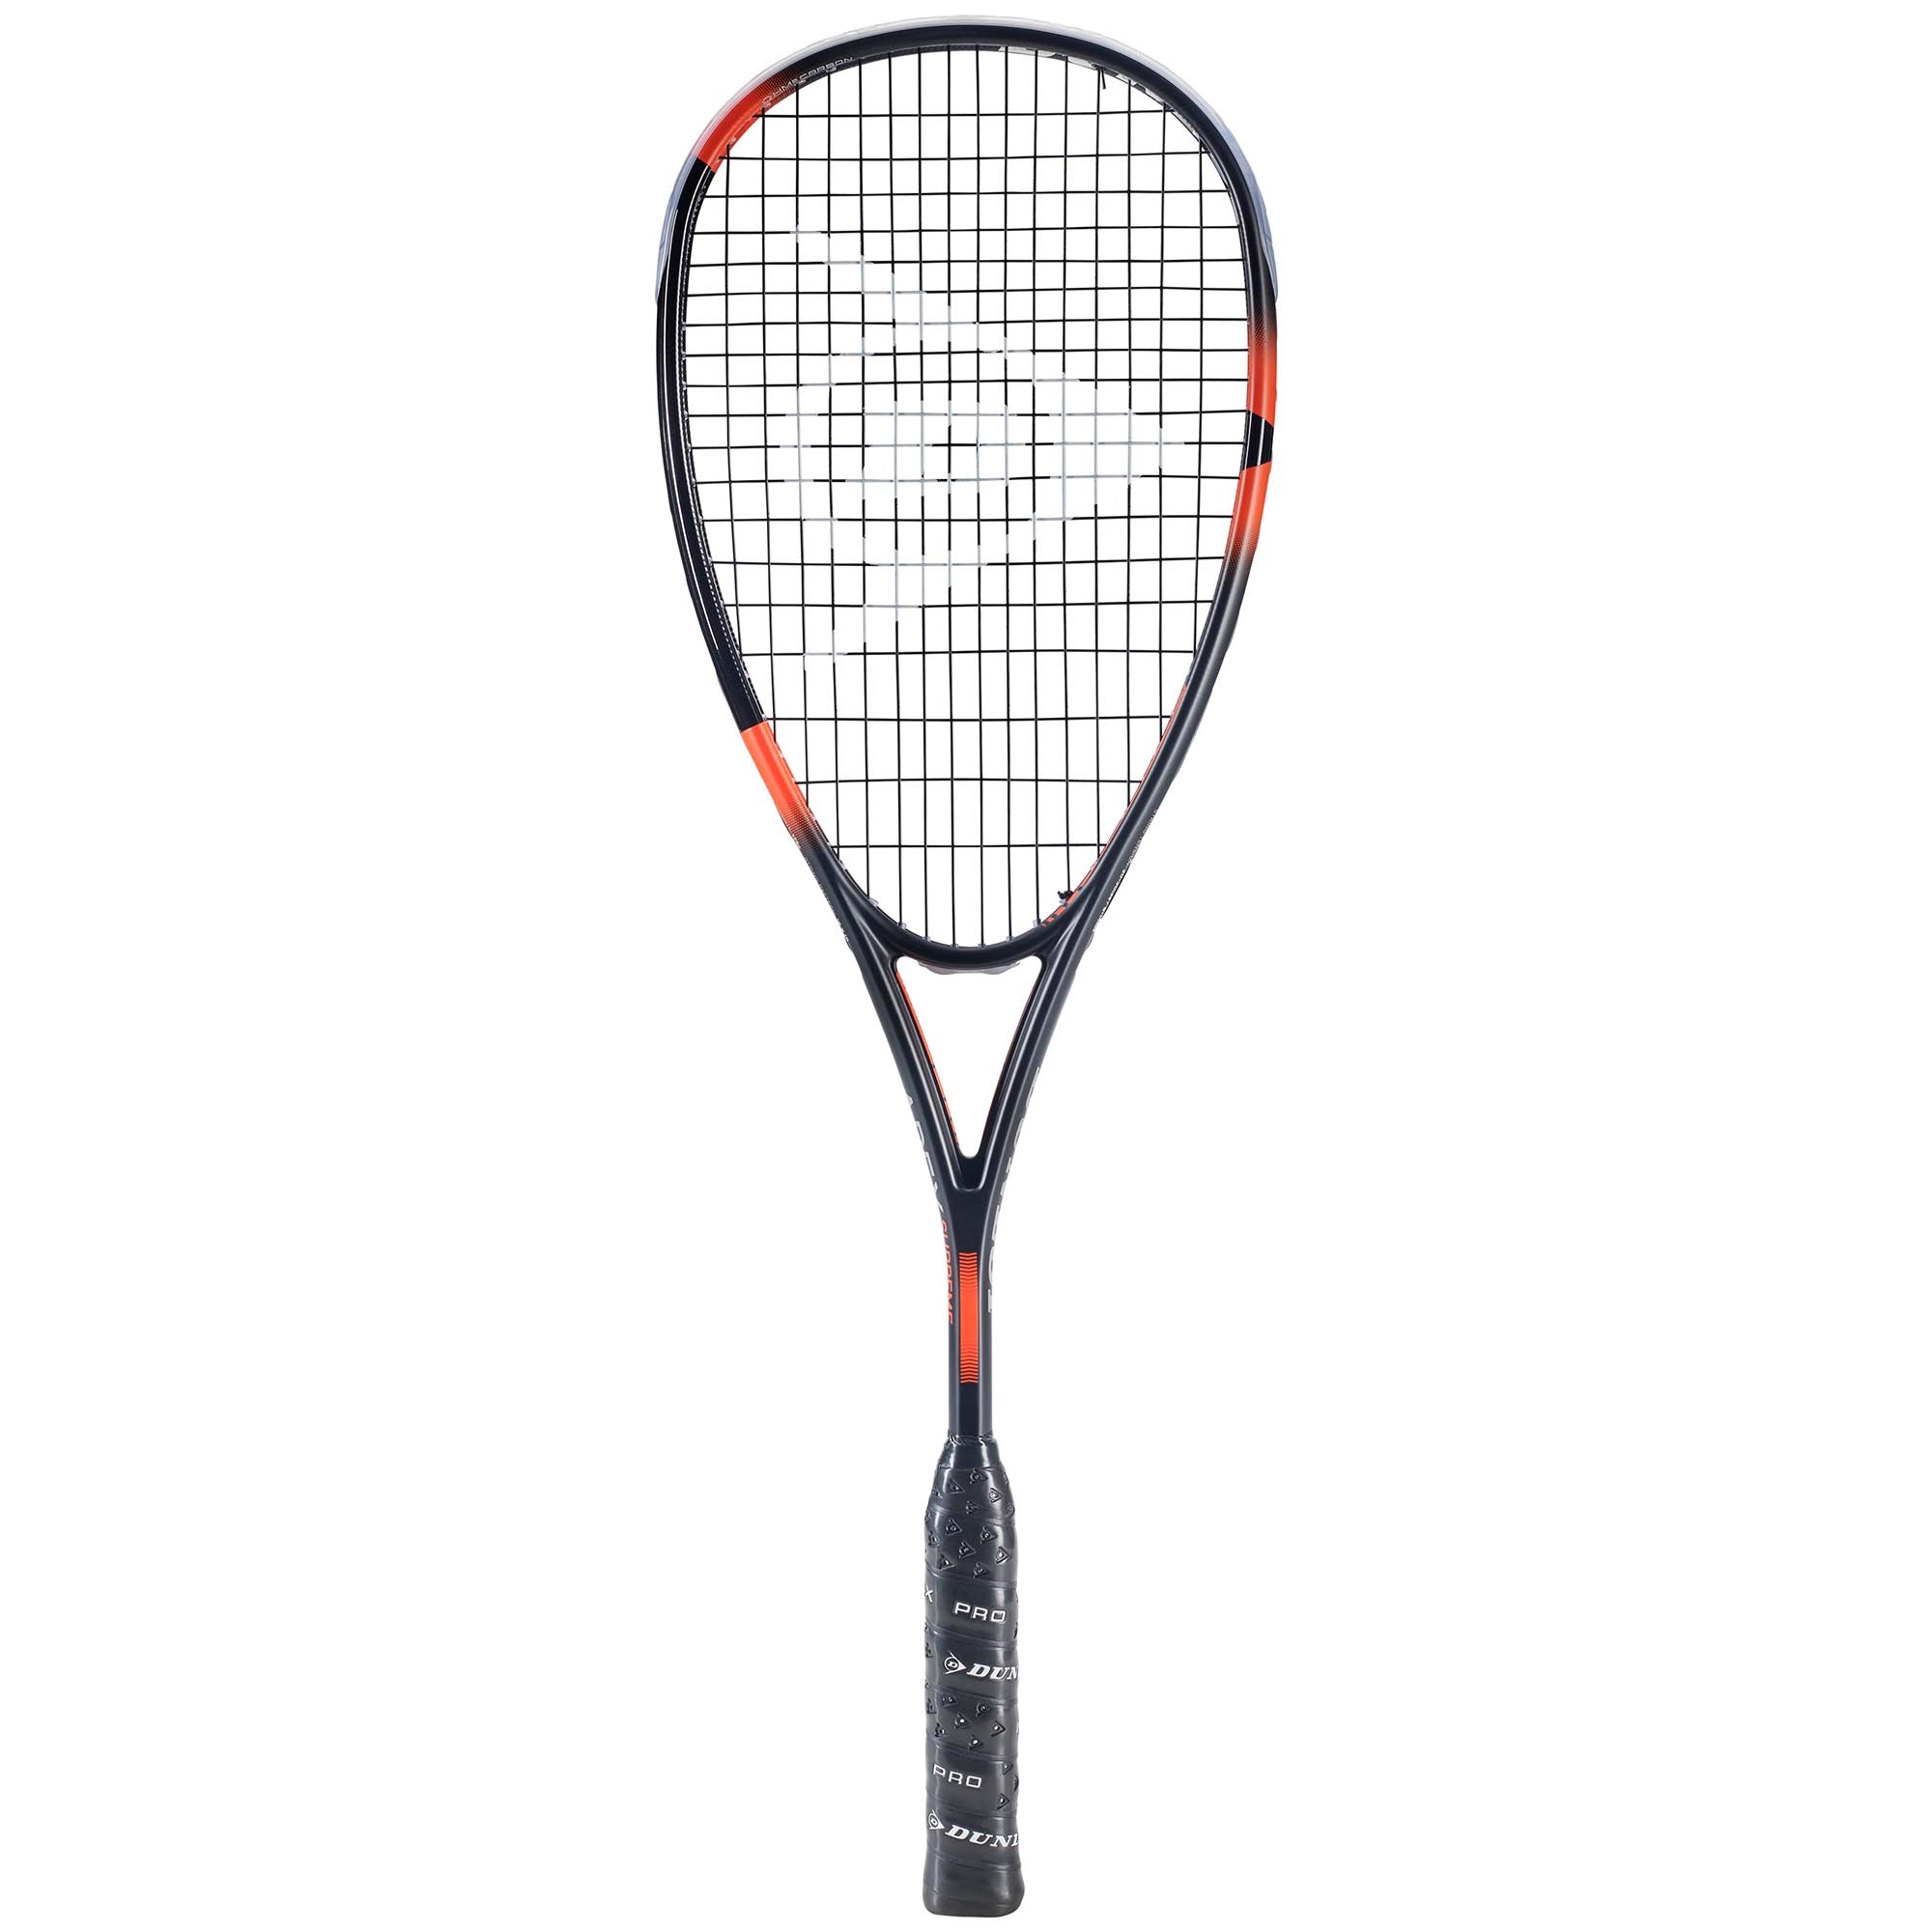 Image of Dunlop Apex Supreme Squash Racket